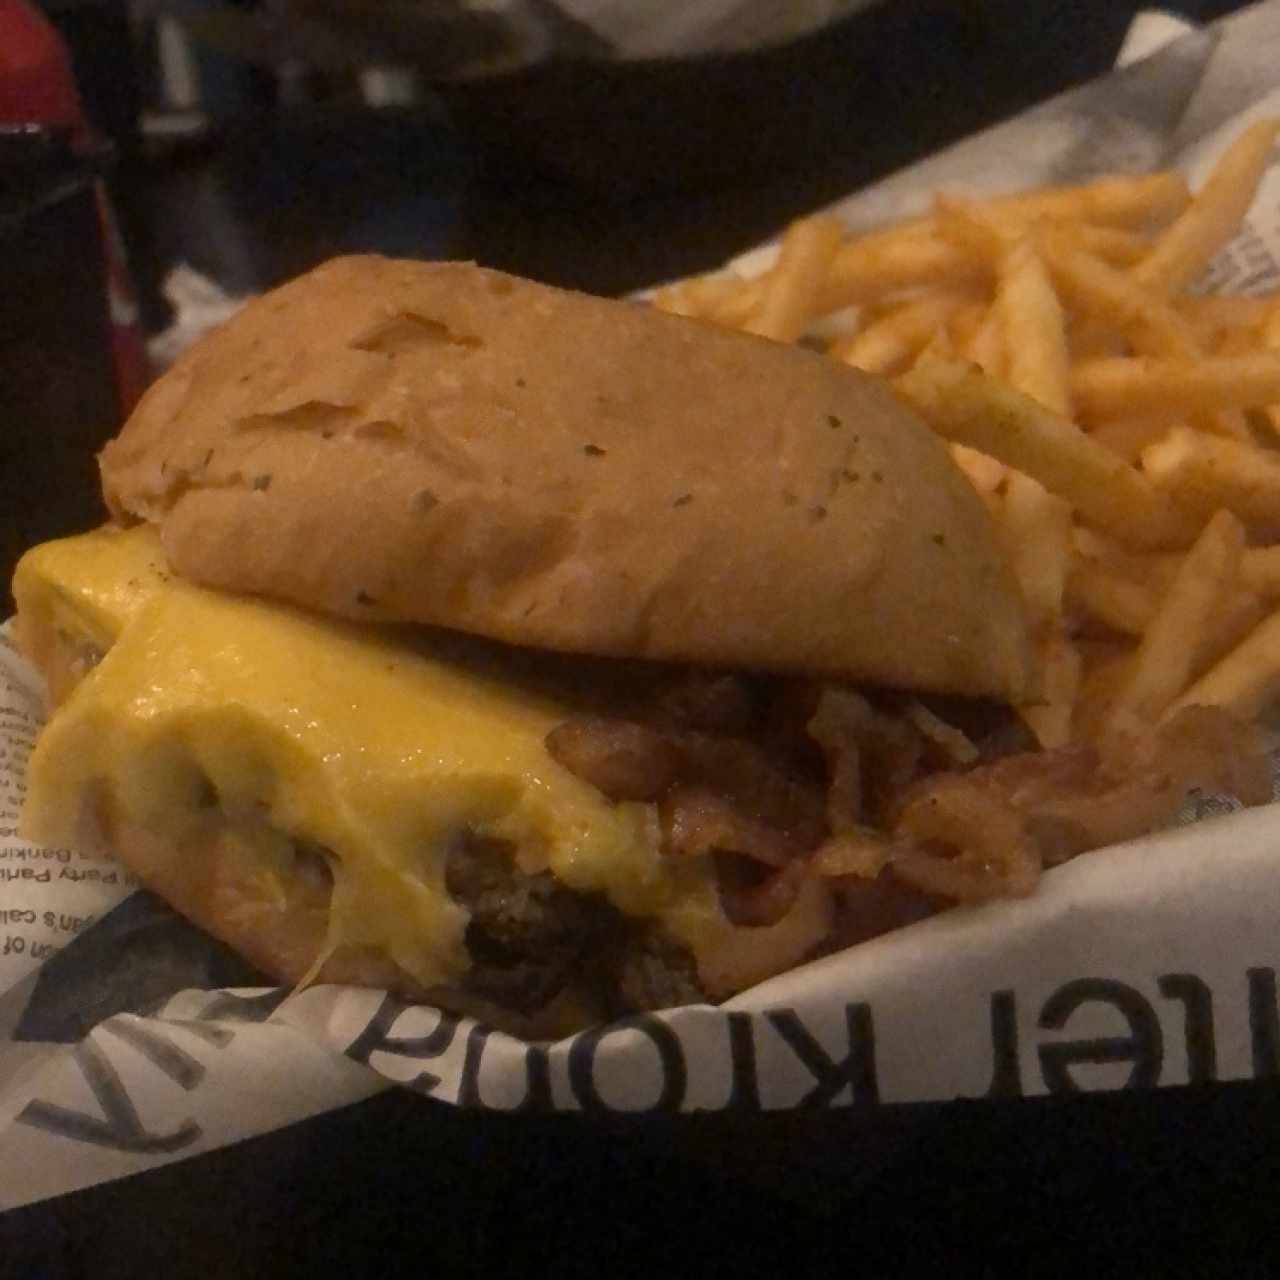 ohhh chesse burger 